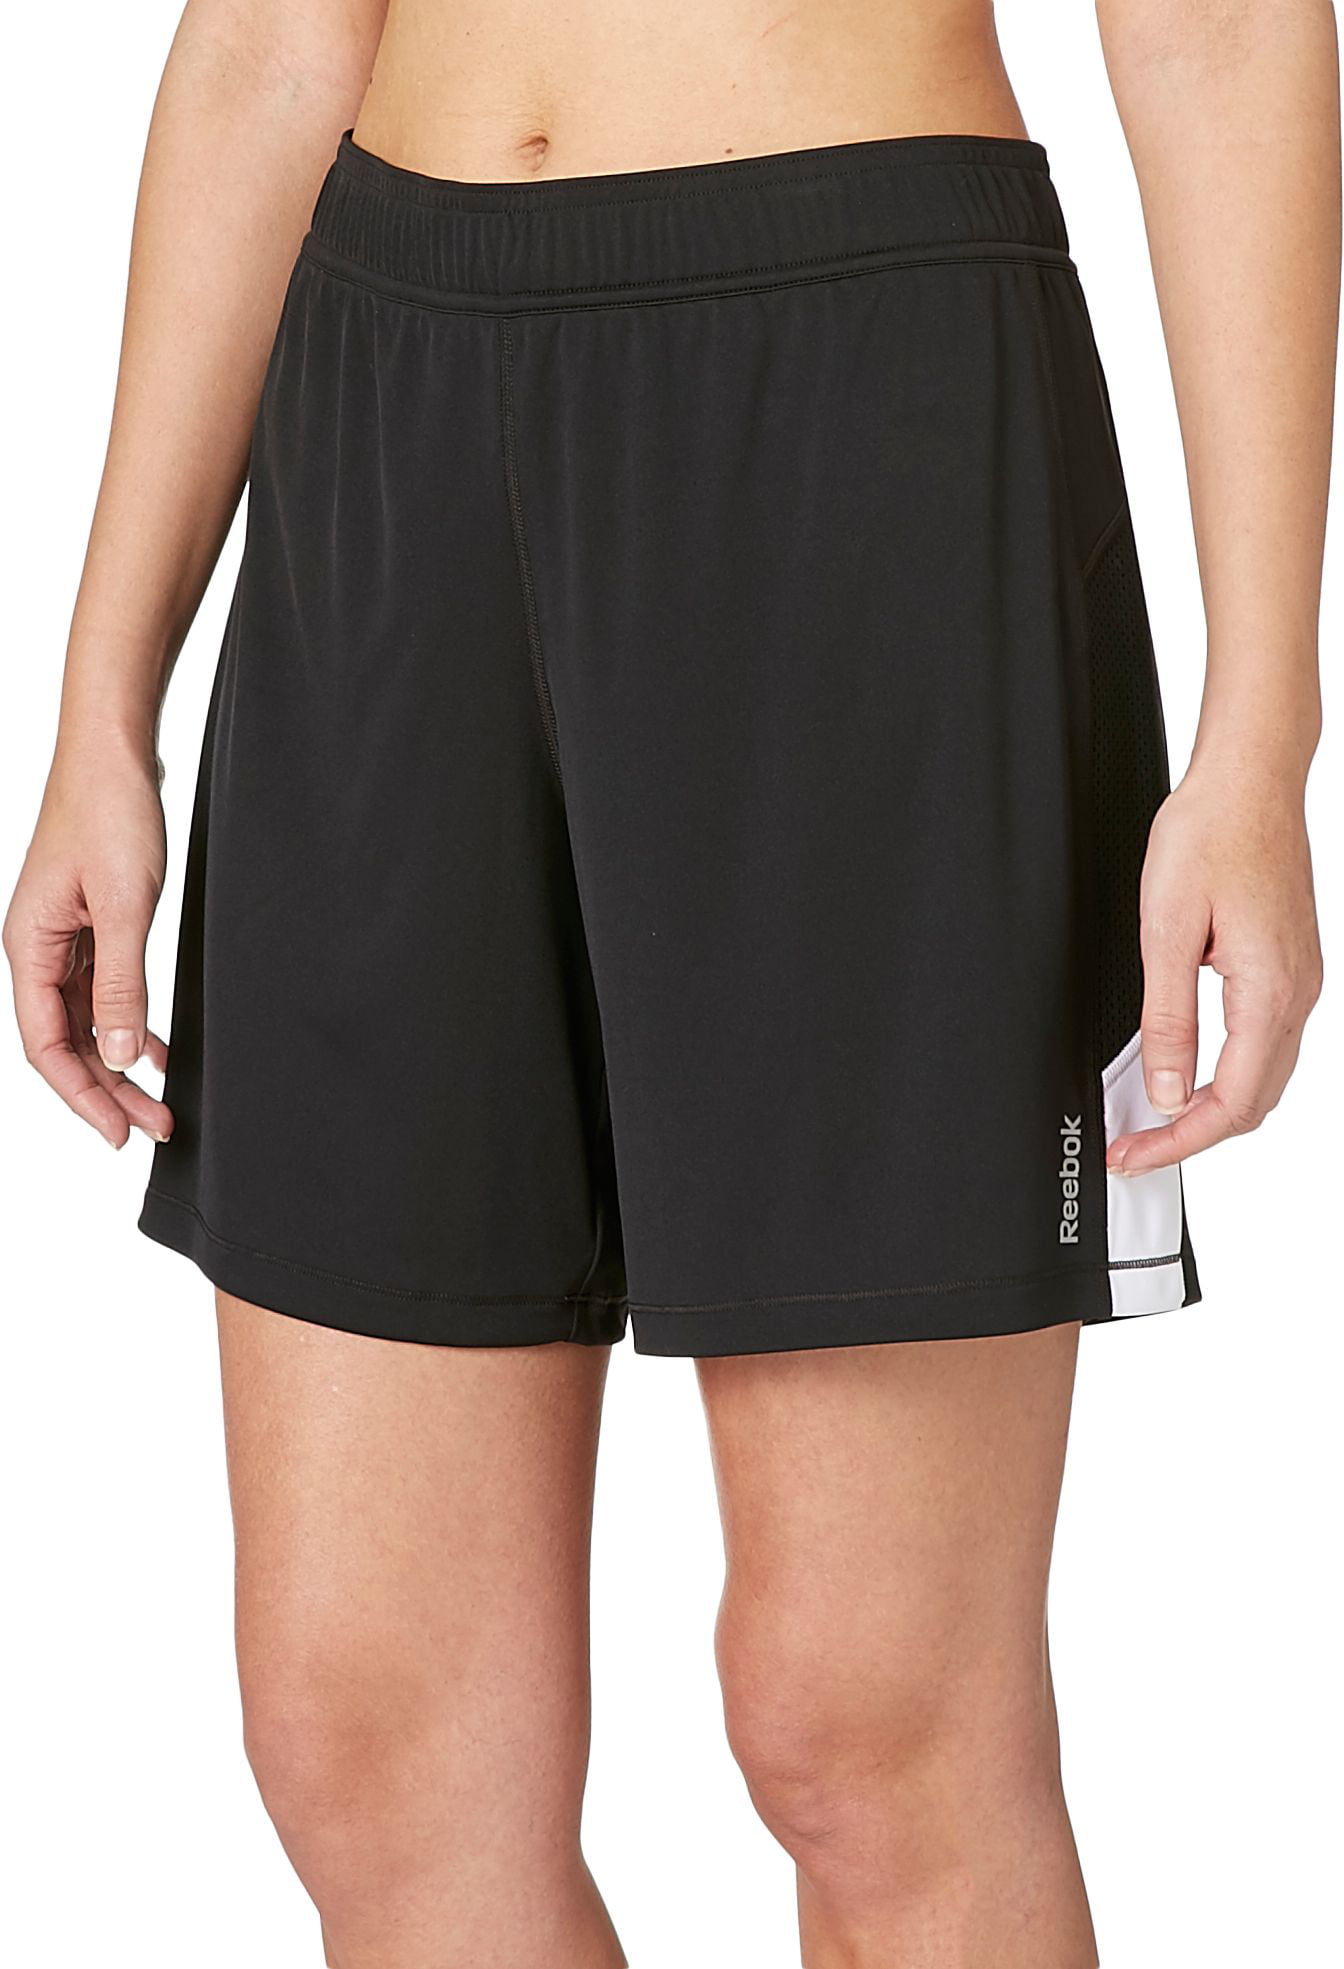 7'' training shorts - Walmart.com 